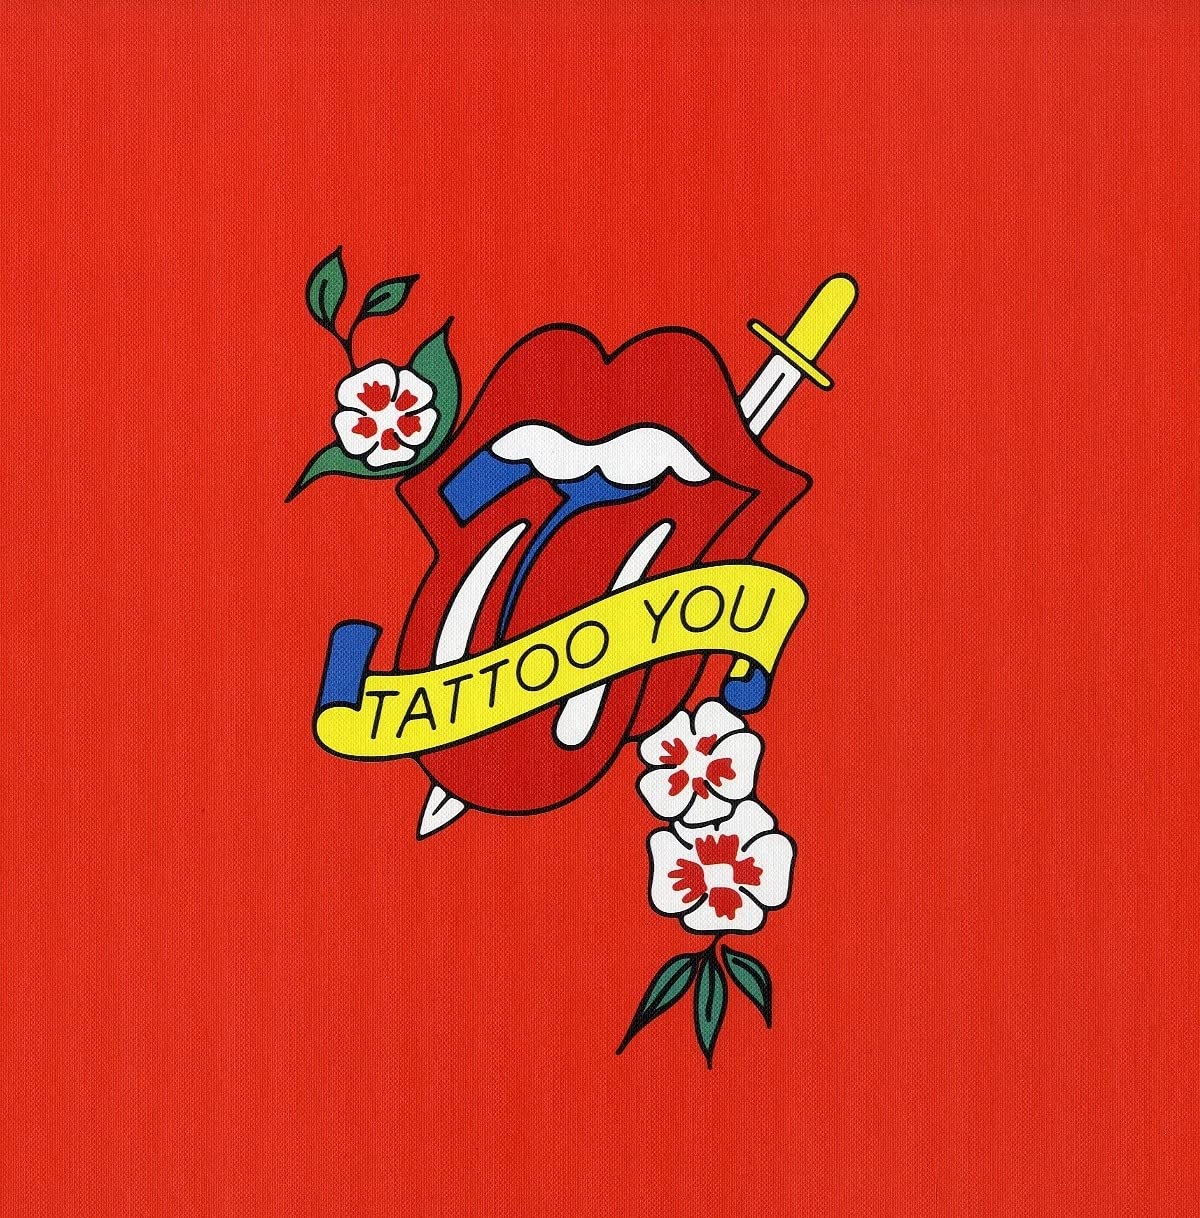 The Rolling Stones (롤링 스톤스) - Tattoo You (Super Deluxe Edition) [픽쳐 디스크 LP+4CD]